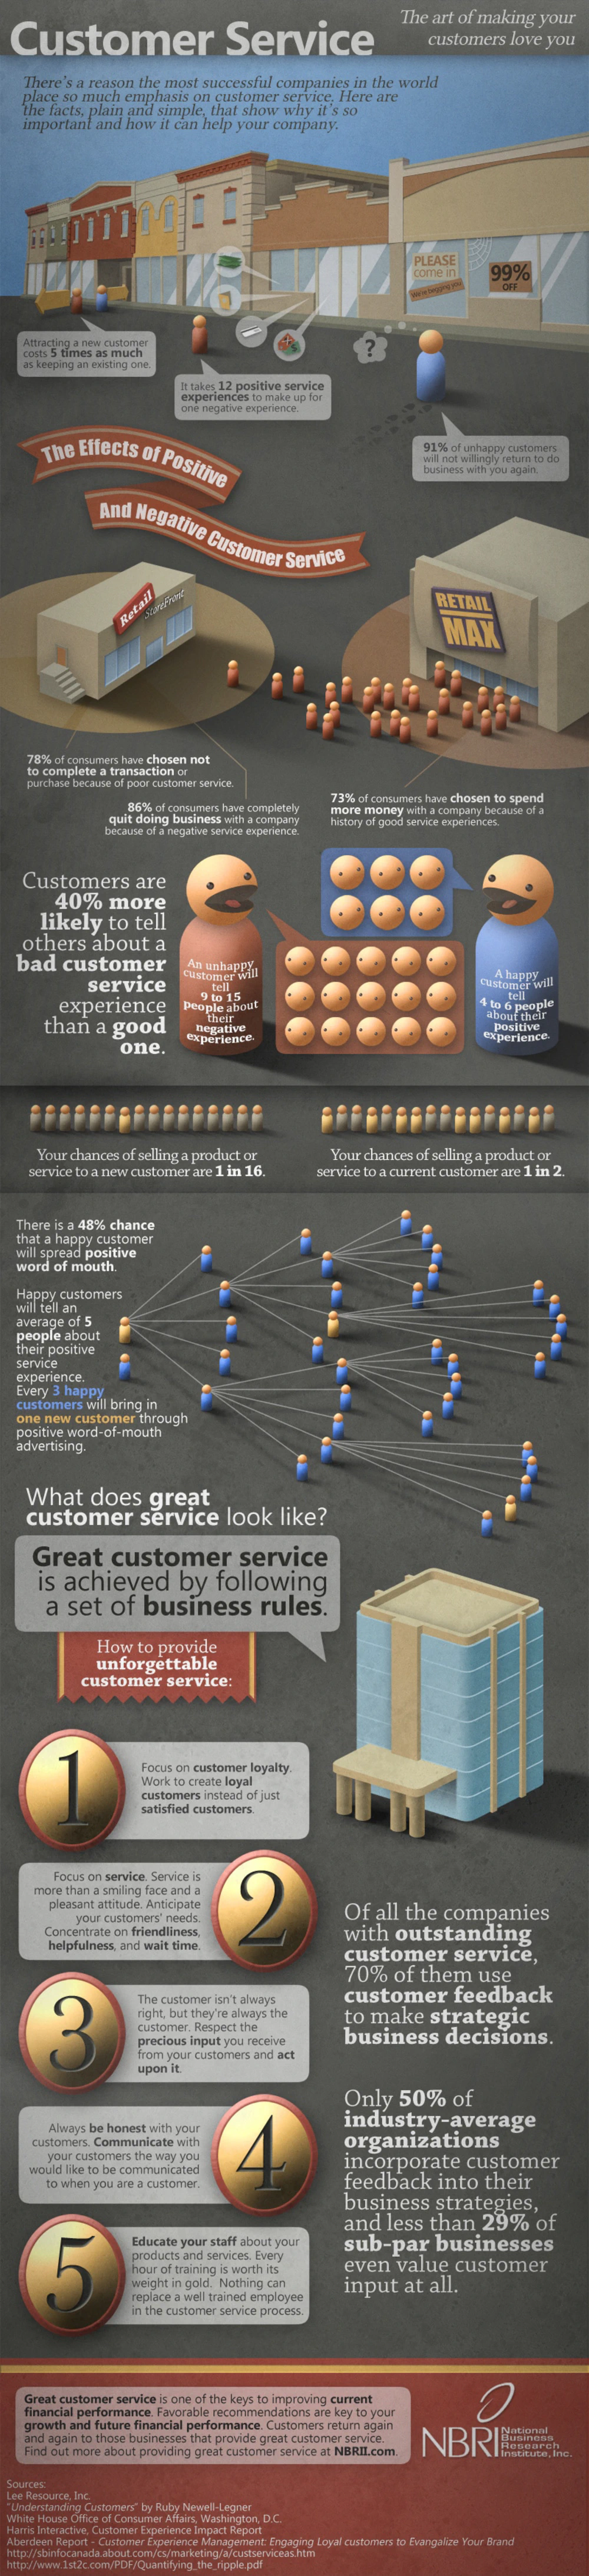 Customer Service infographic